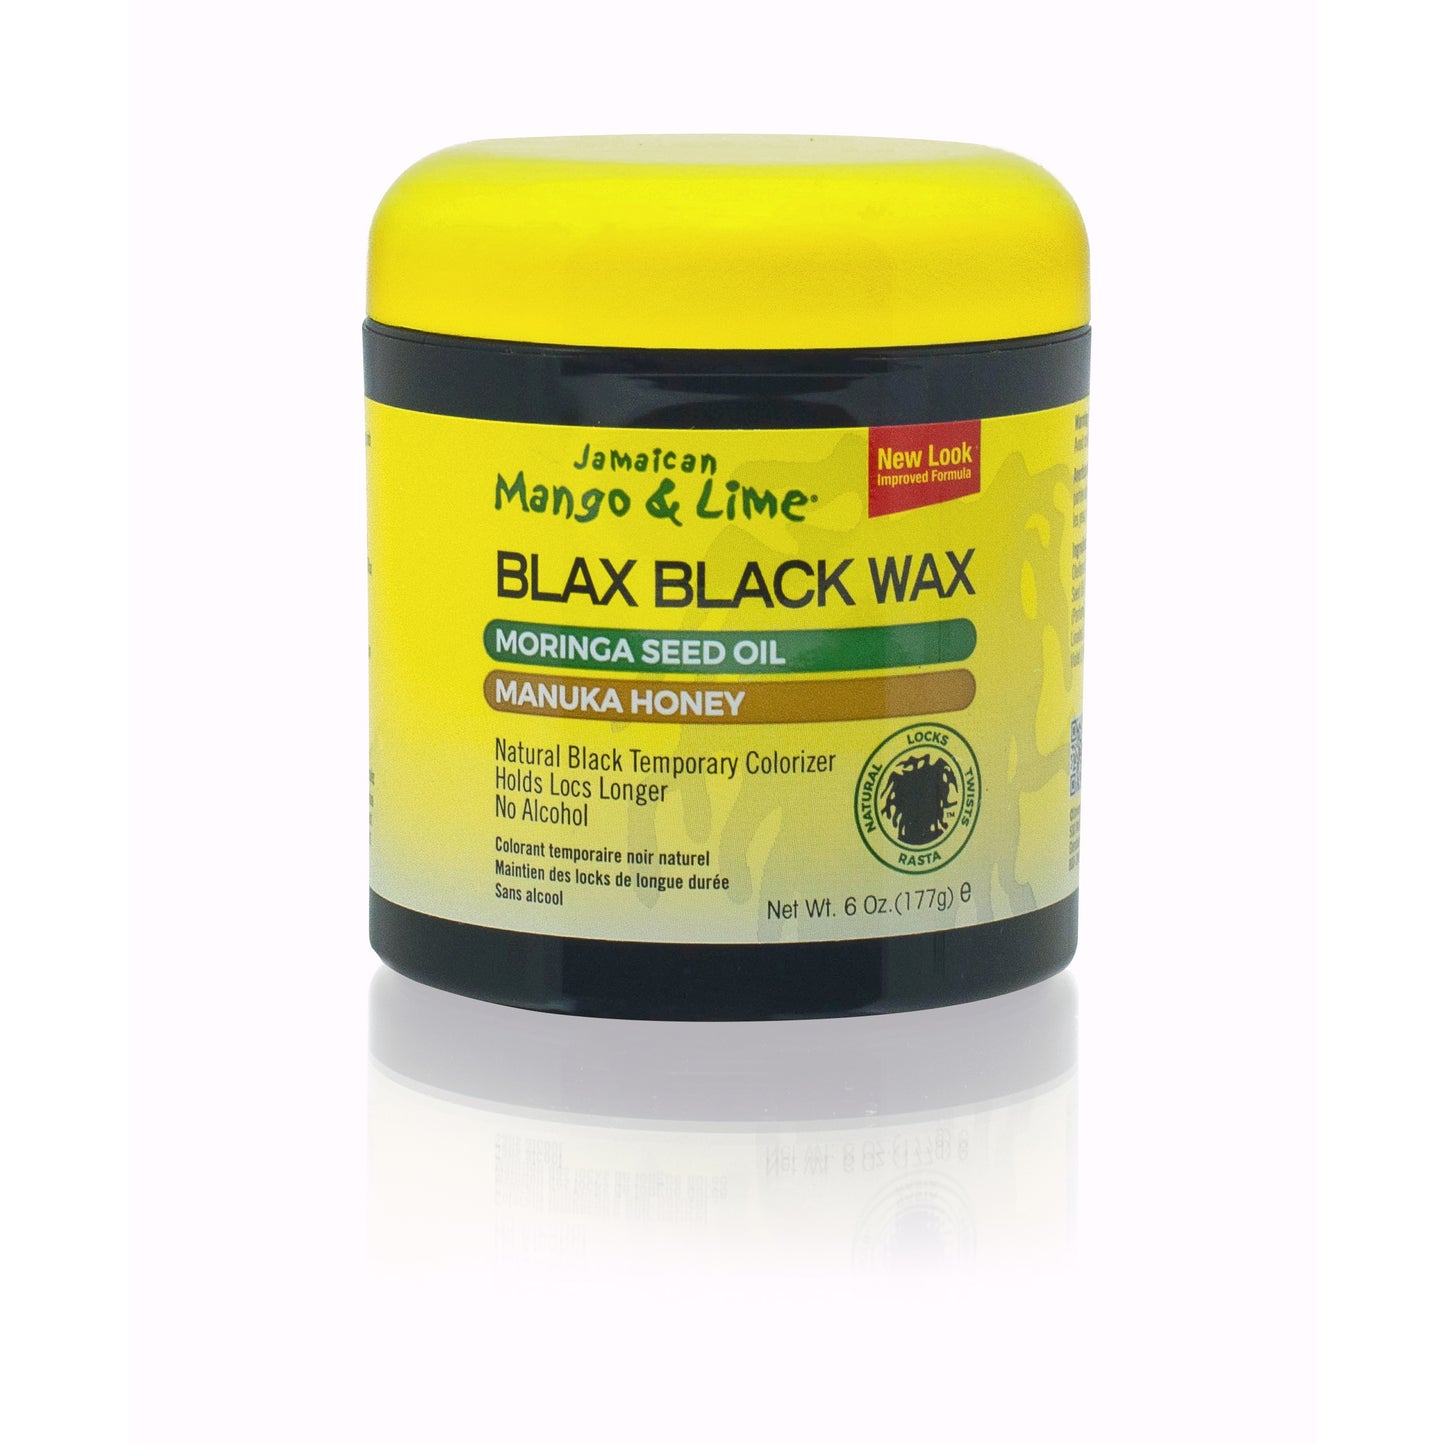 Jamaican Mango & Lime: Black Wax